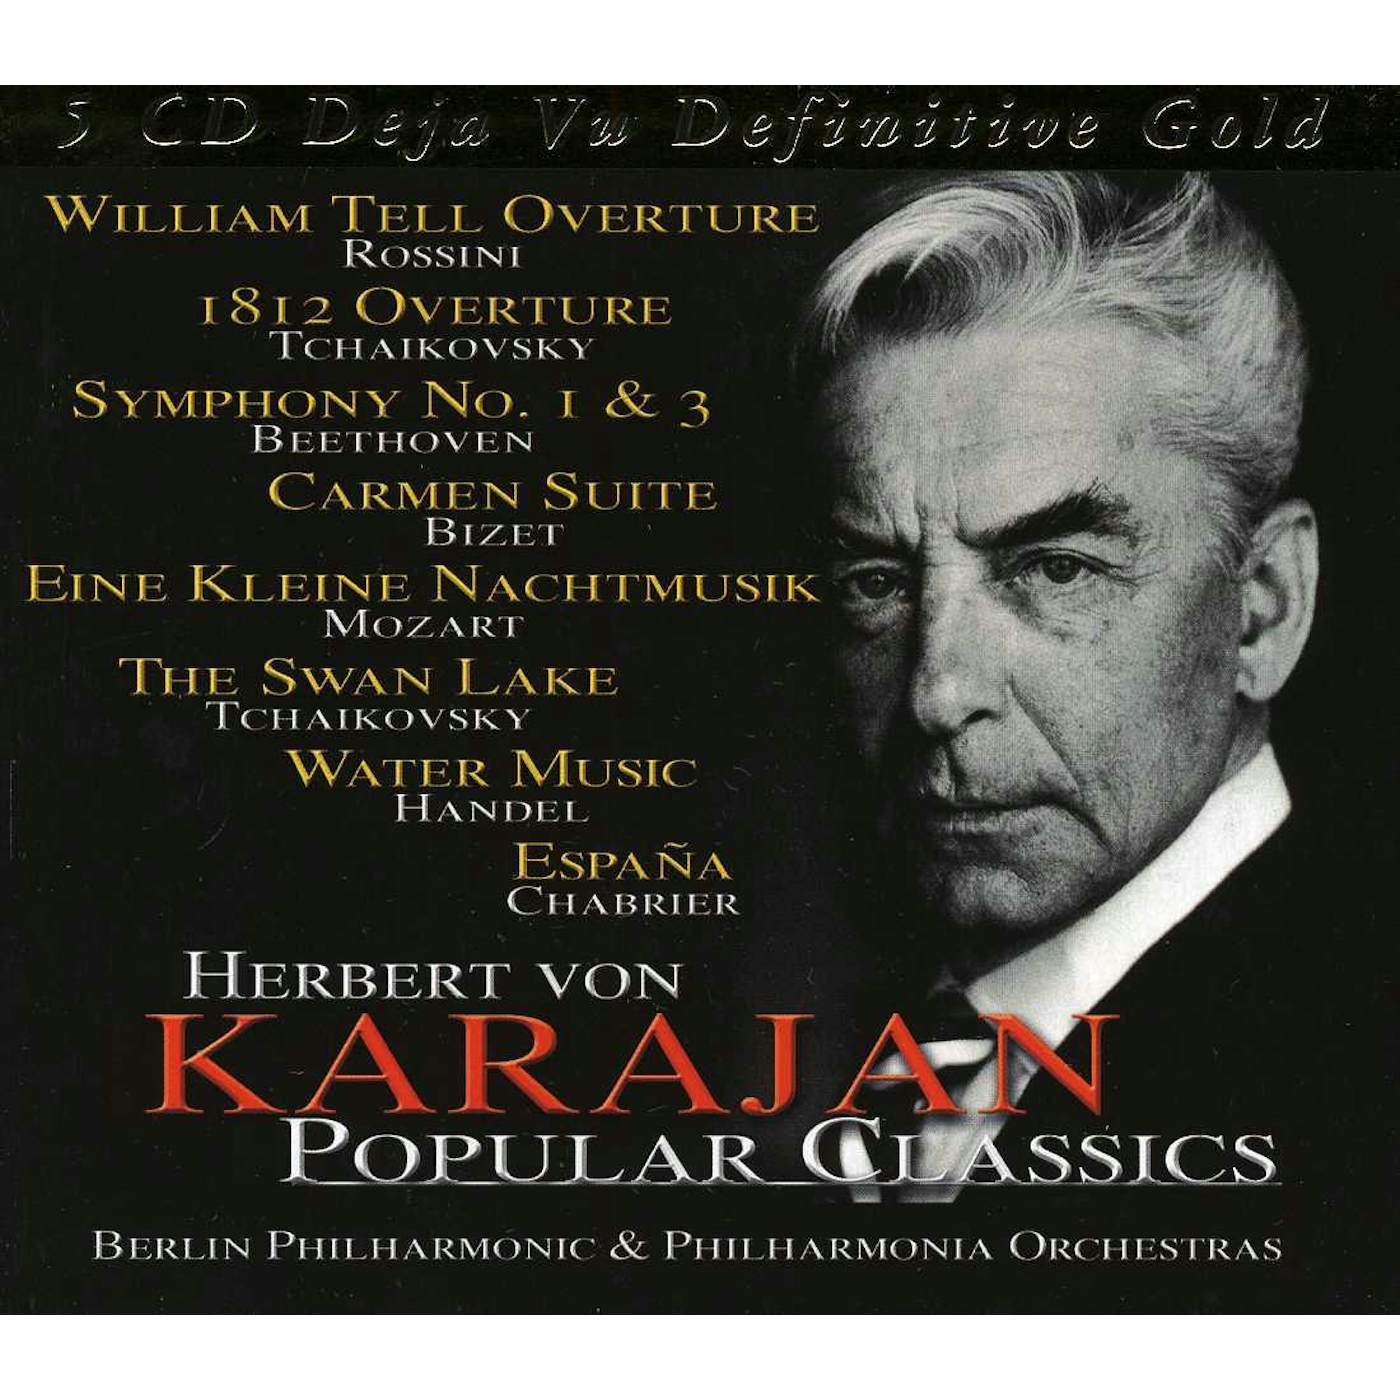 Herbert von Karajan POPULAR CLASSICS CD